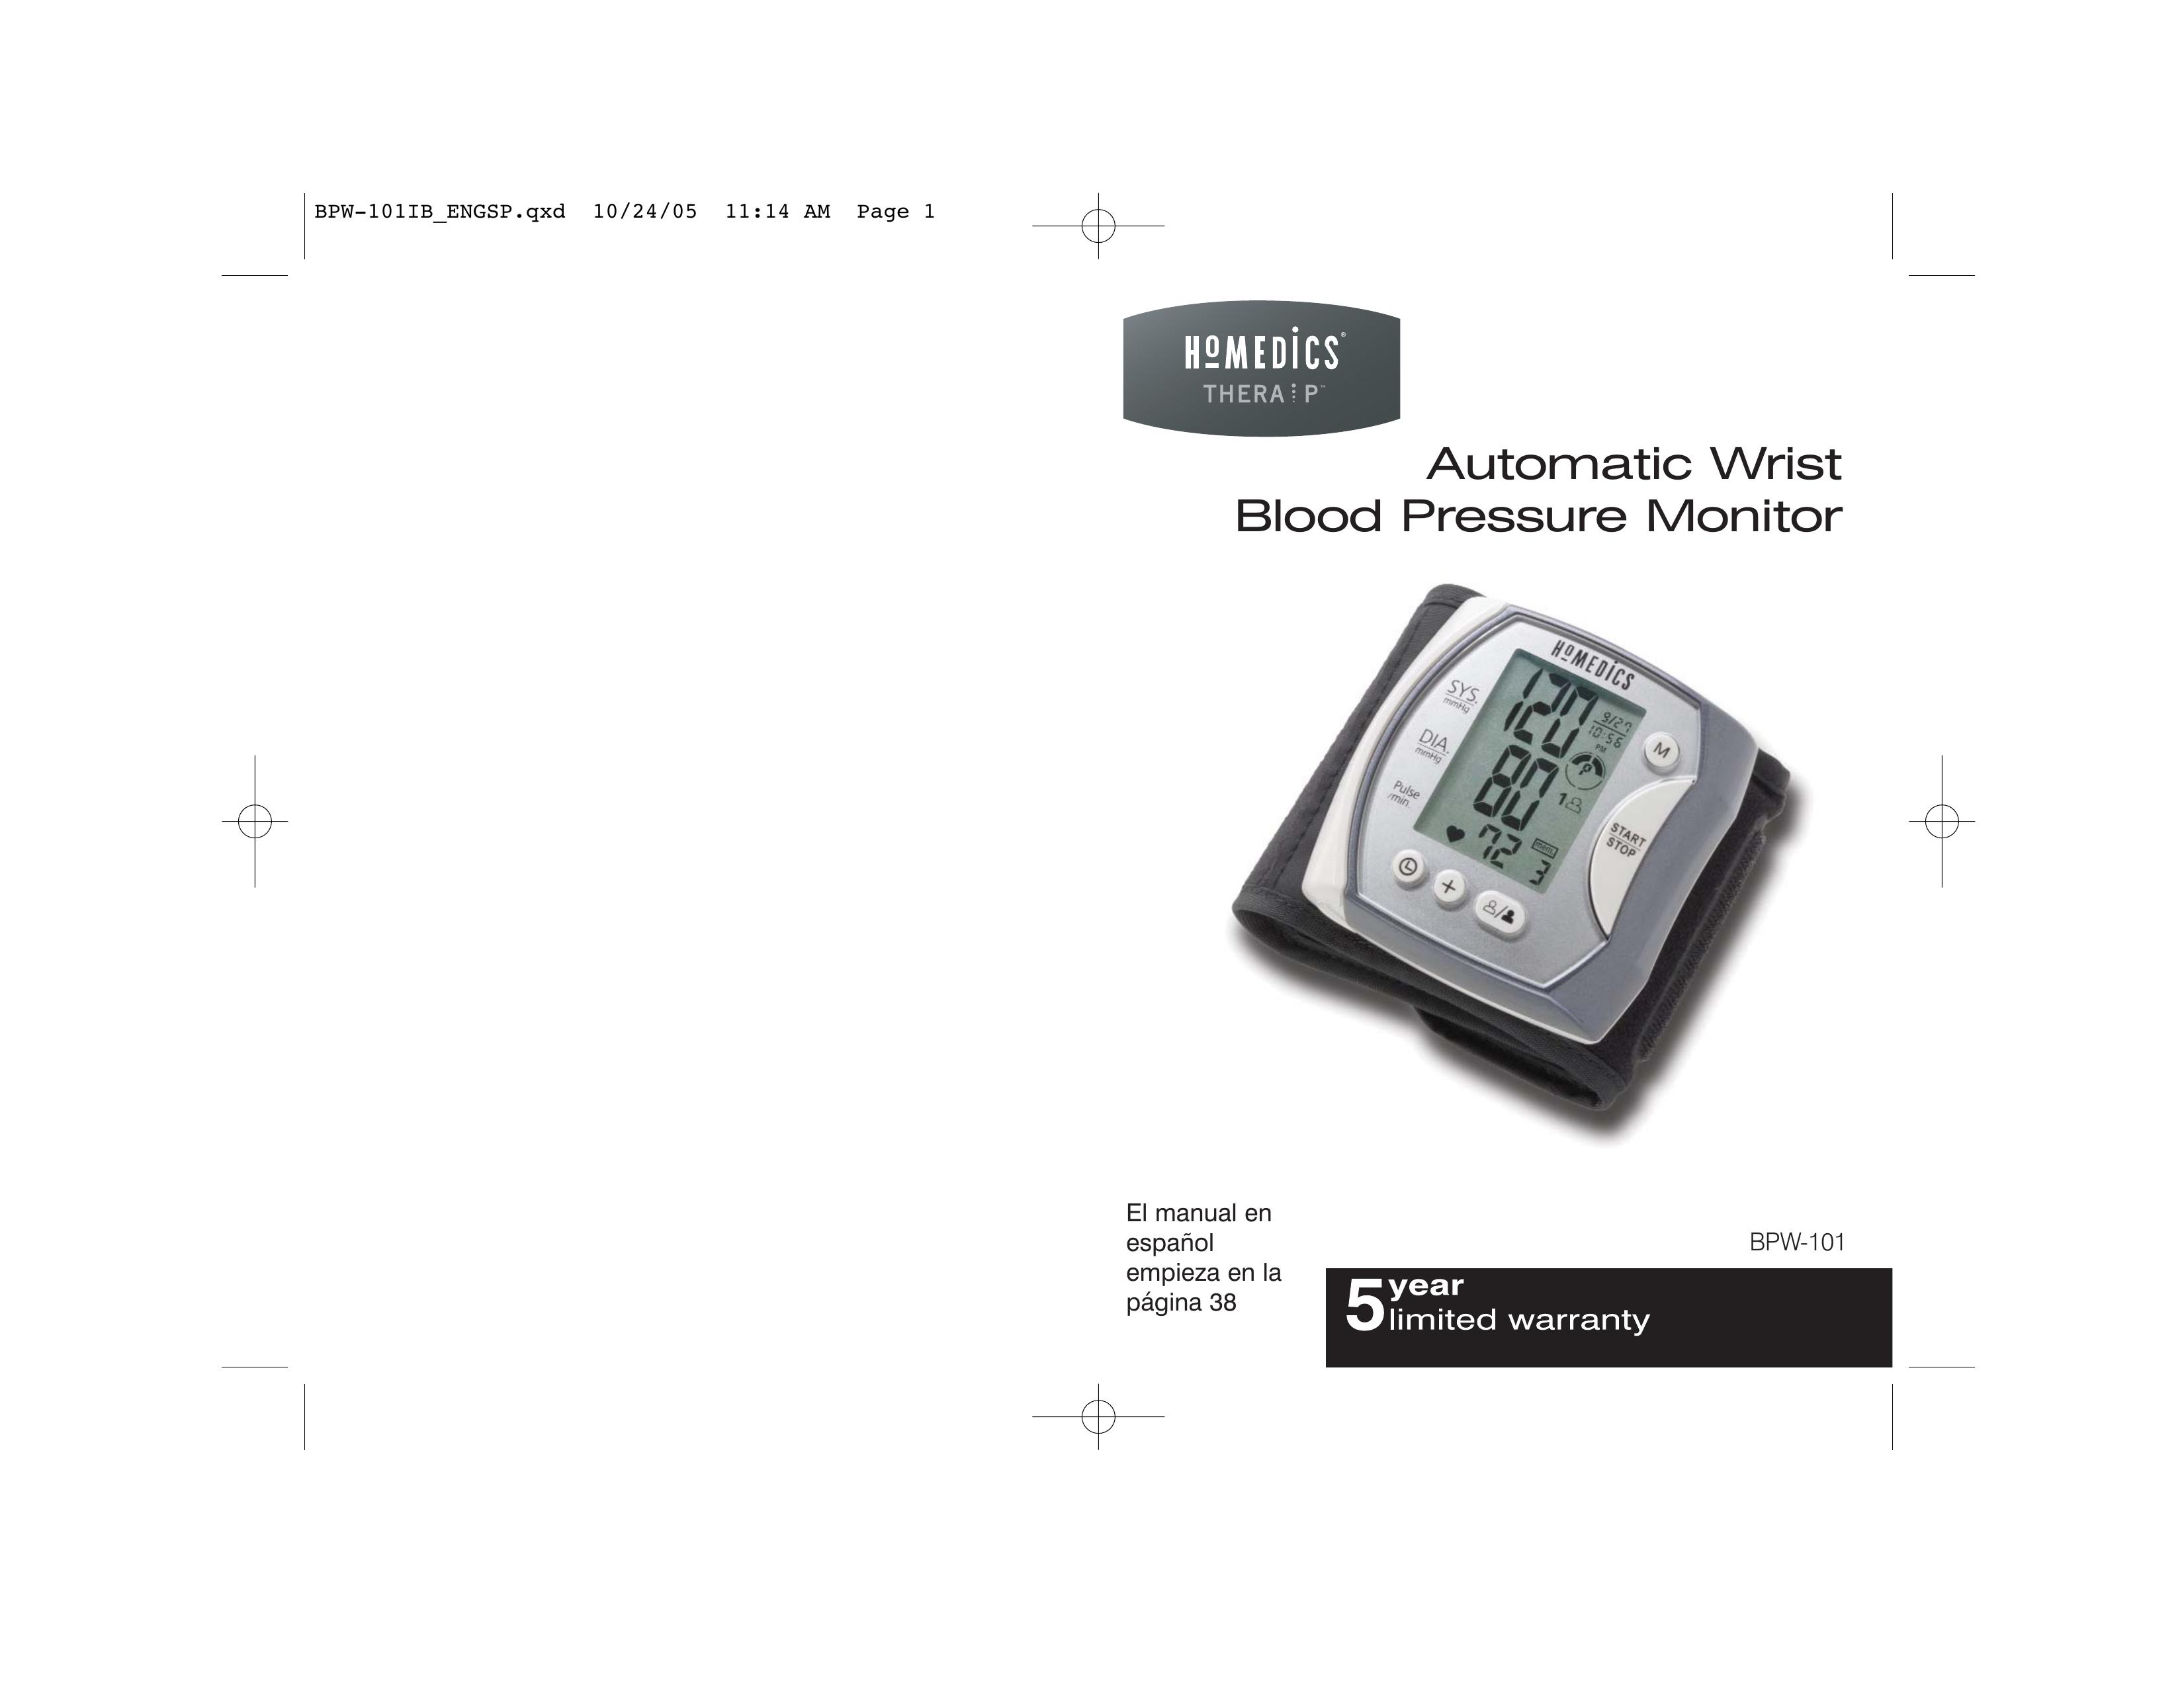 HoMedics BPW-101 Blood Pressure Monitor User Manual